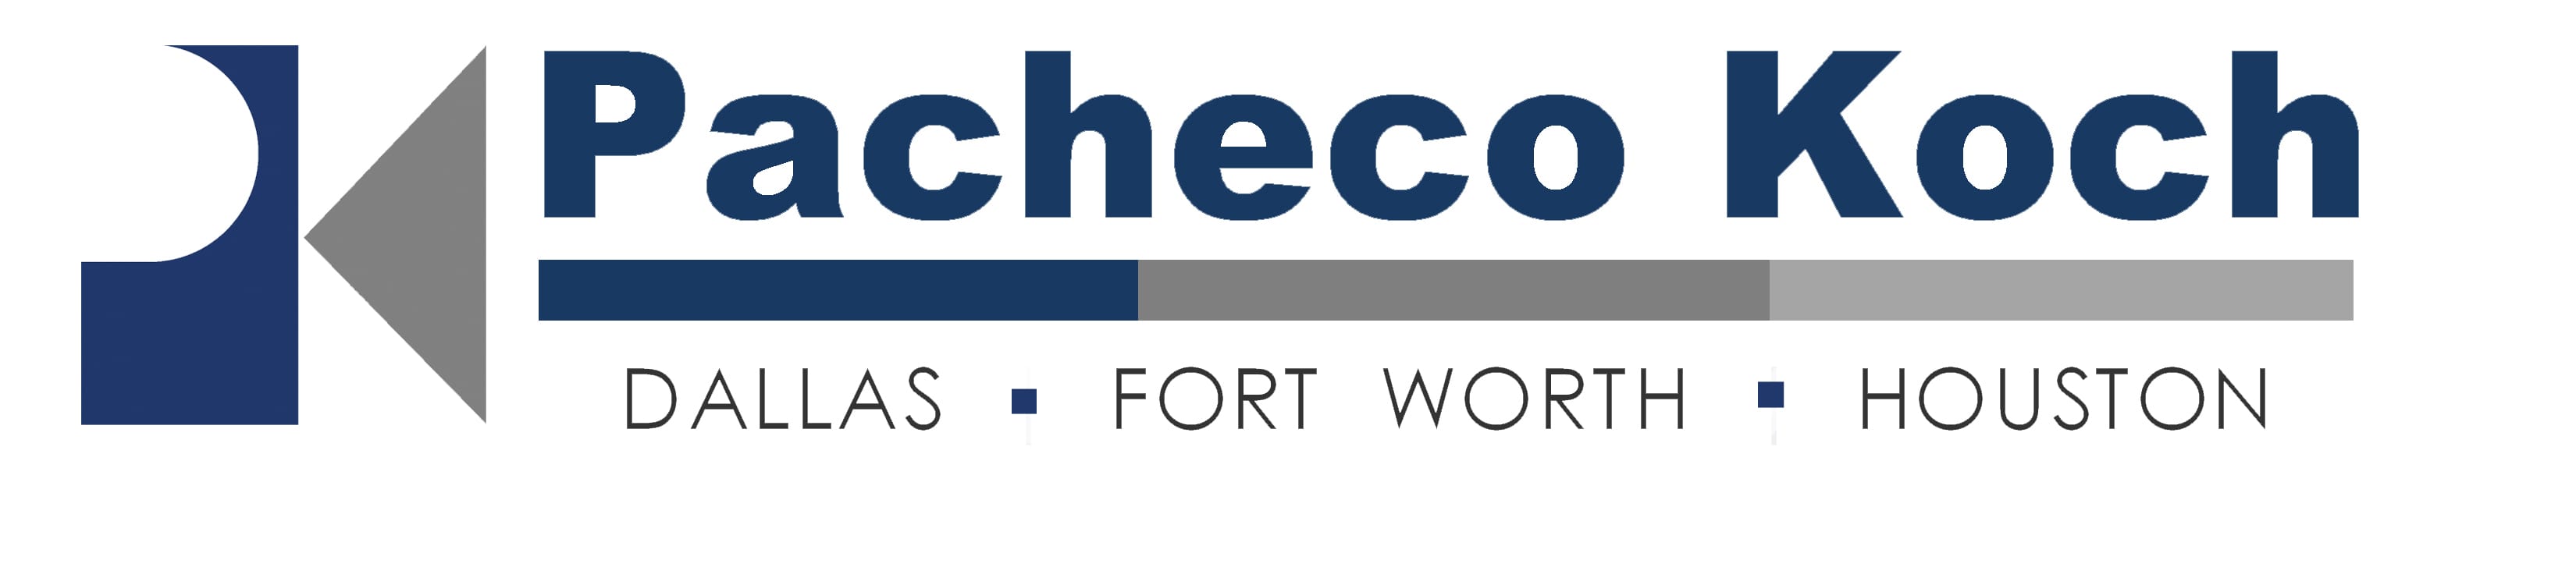 Koch Logo - Pacheco Koch Logo Leader Annual Sponsor North Texas